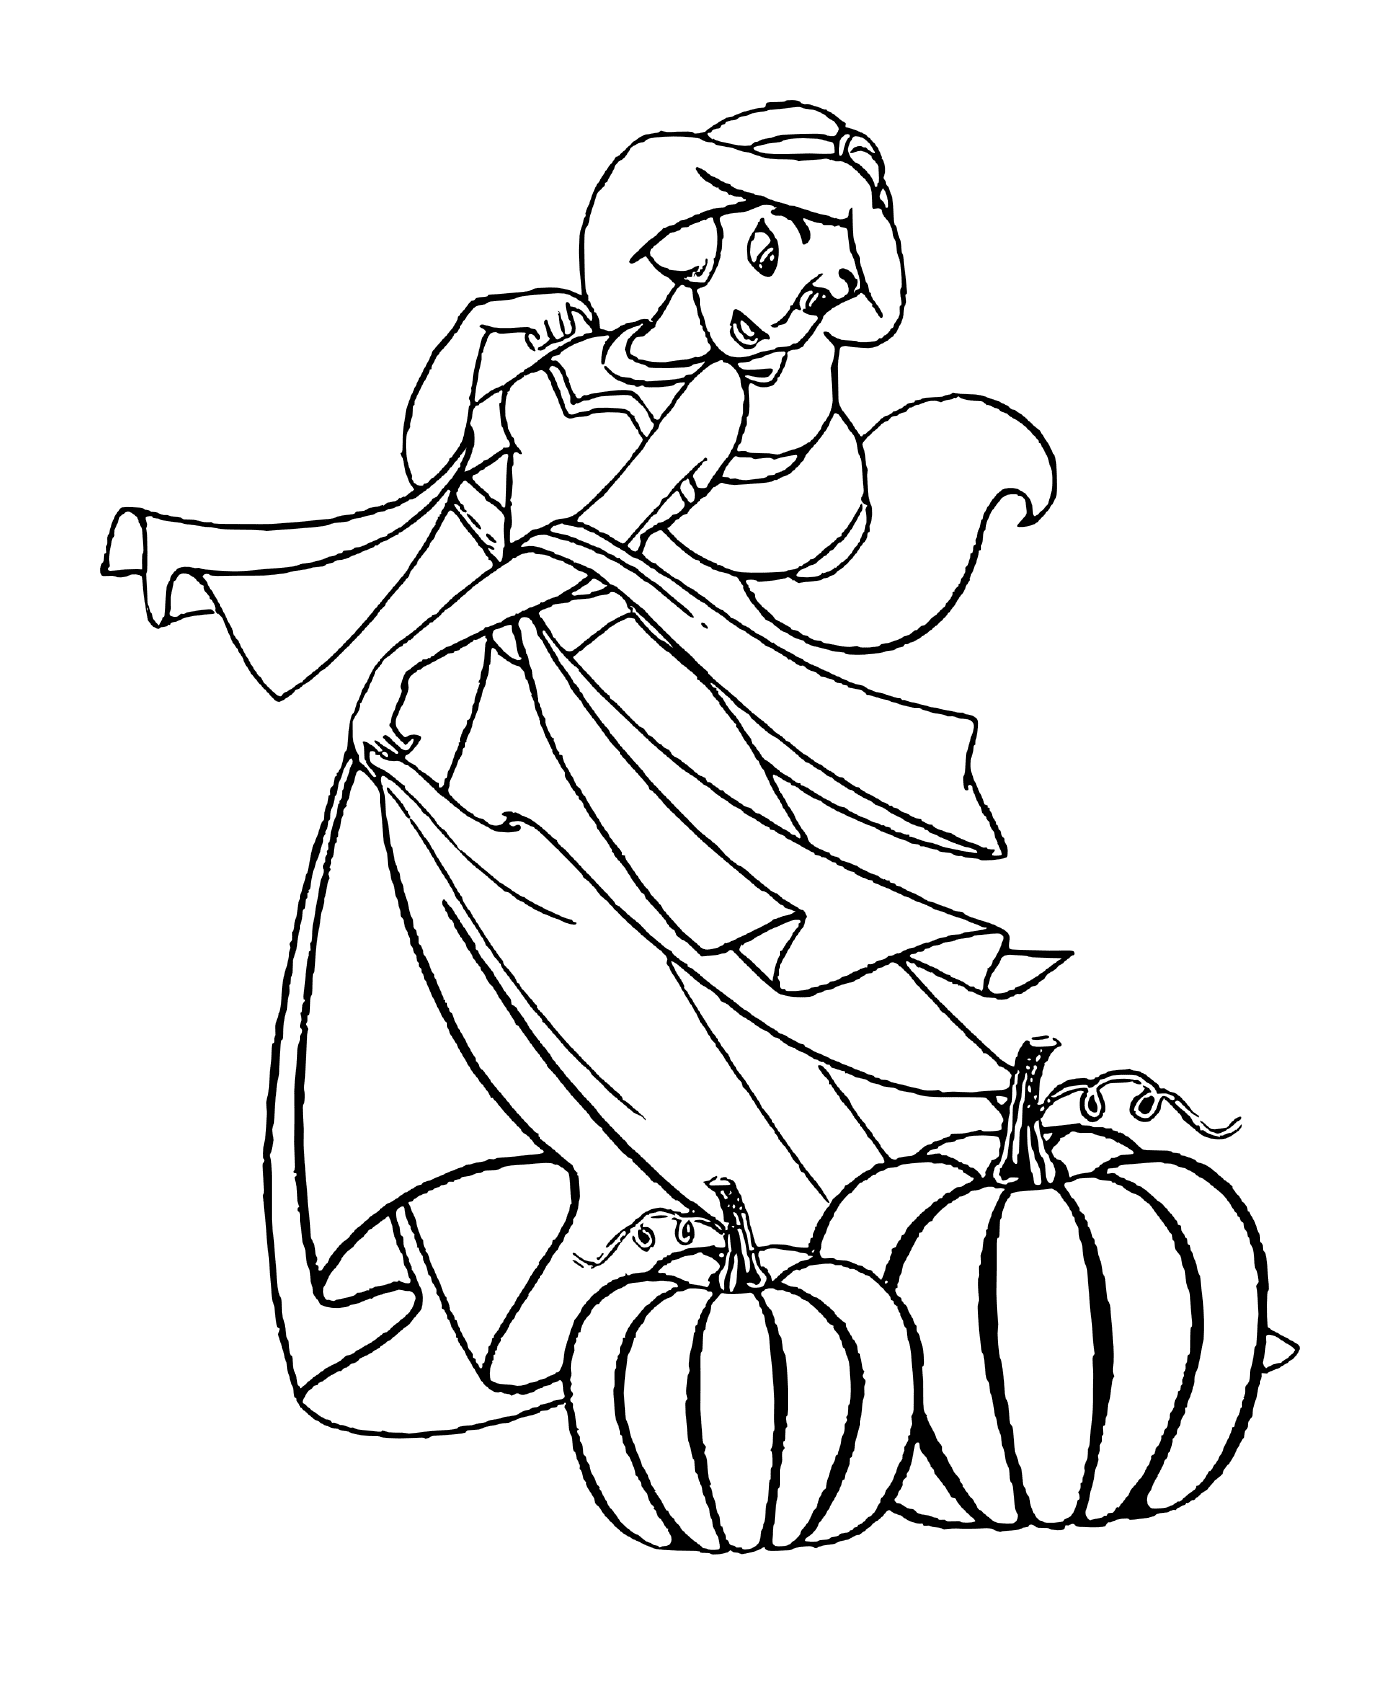  Gelsomino, principessa di Halloween 